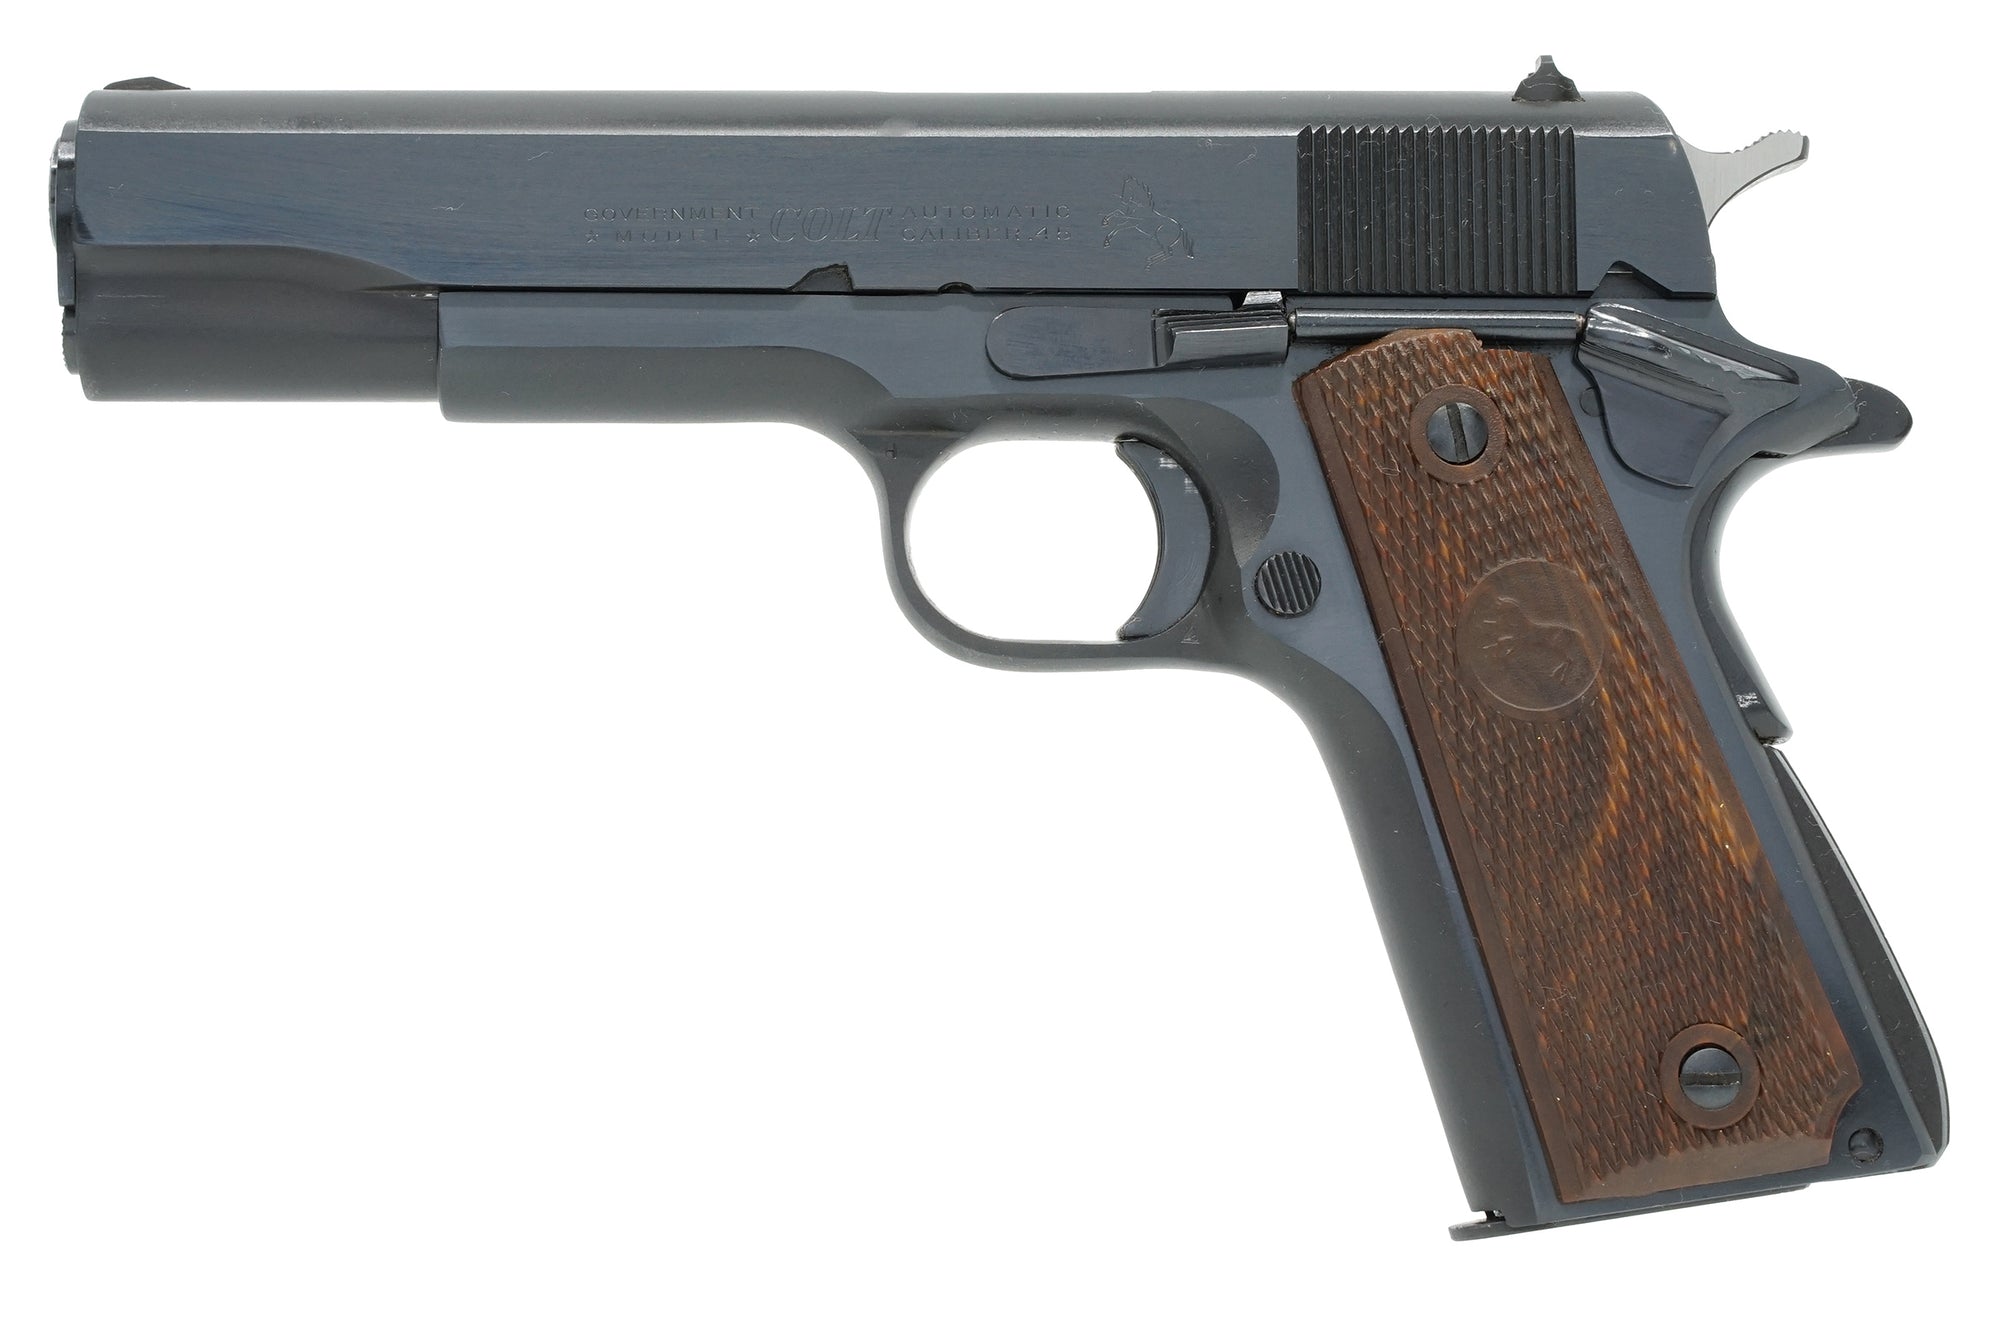 Colt Government Model 45ACP SN:335133-C MFG:1970 - BB Transitional